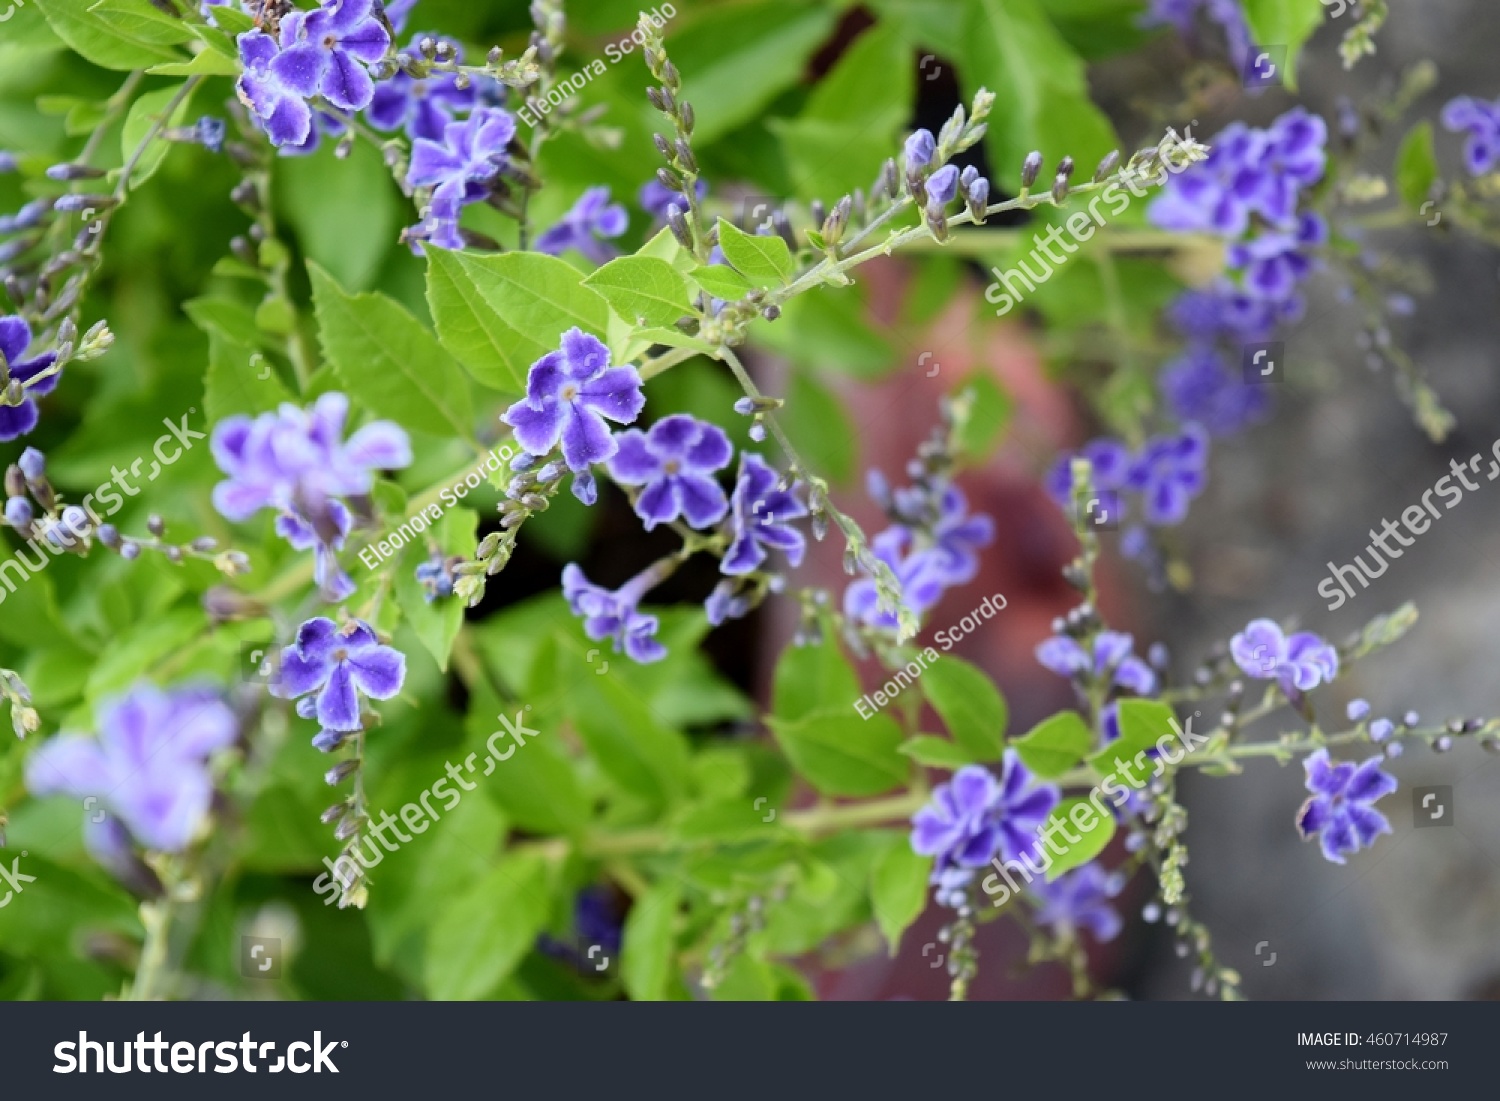 Blue Flowers Of Duranta Stock Photo 460714987 : Shutterstock